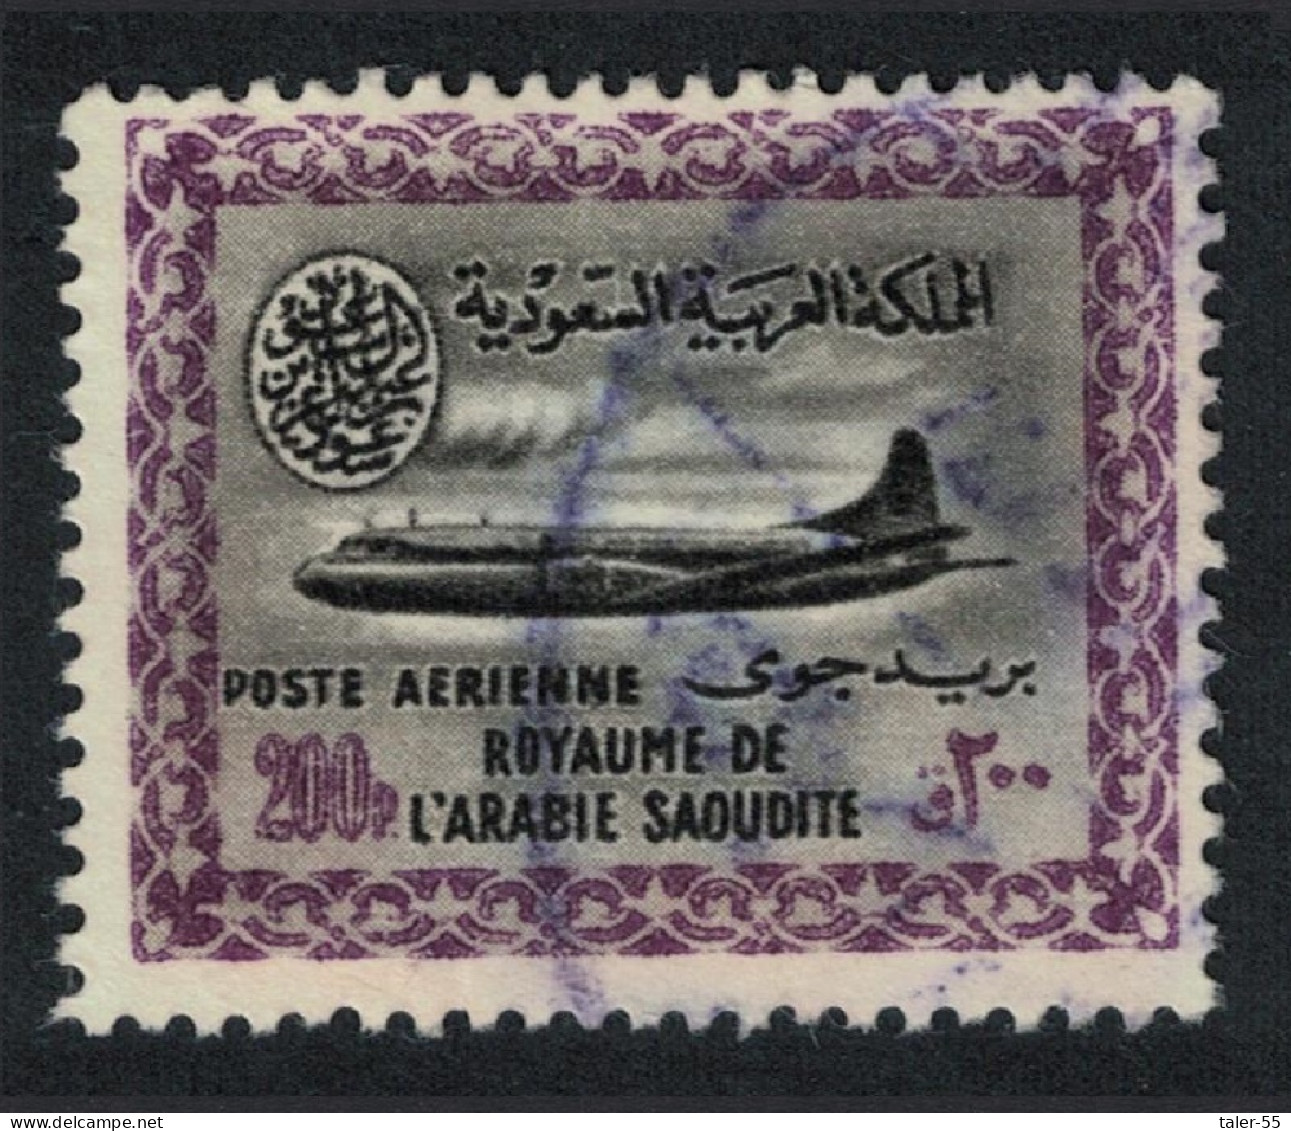 Saudi Arabia Vickers Viscount 800 Aircraft 200p KEY VALUE 1964 Canc SG#442 Sc#242 - Saudi Arabia